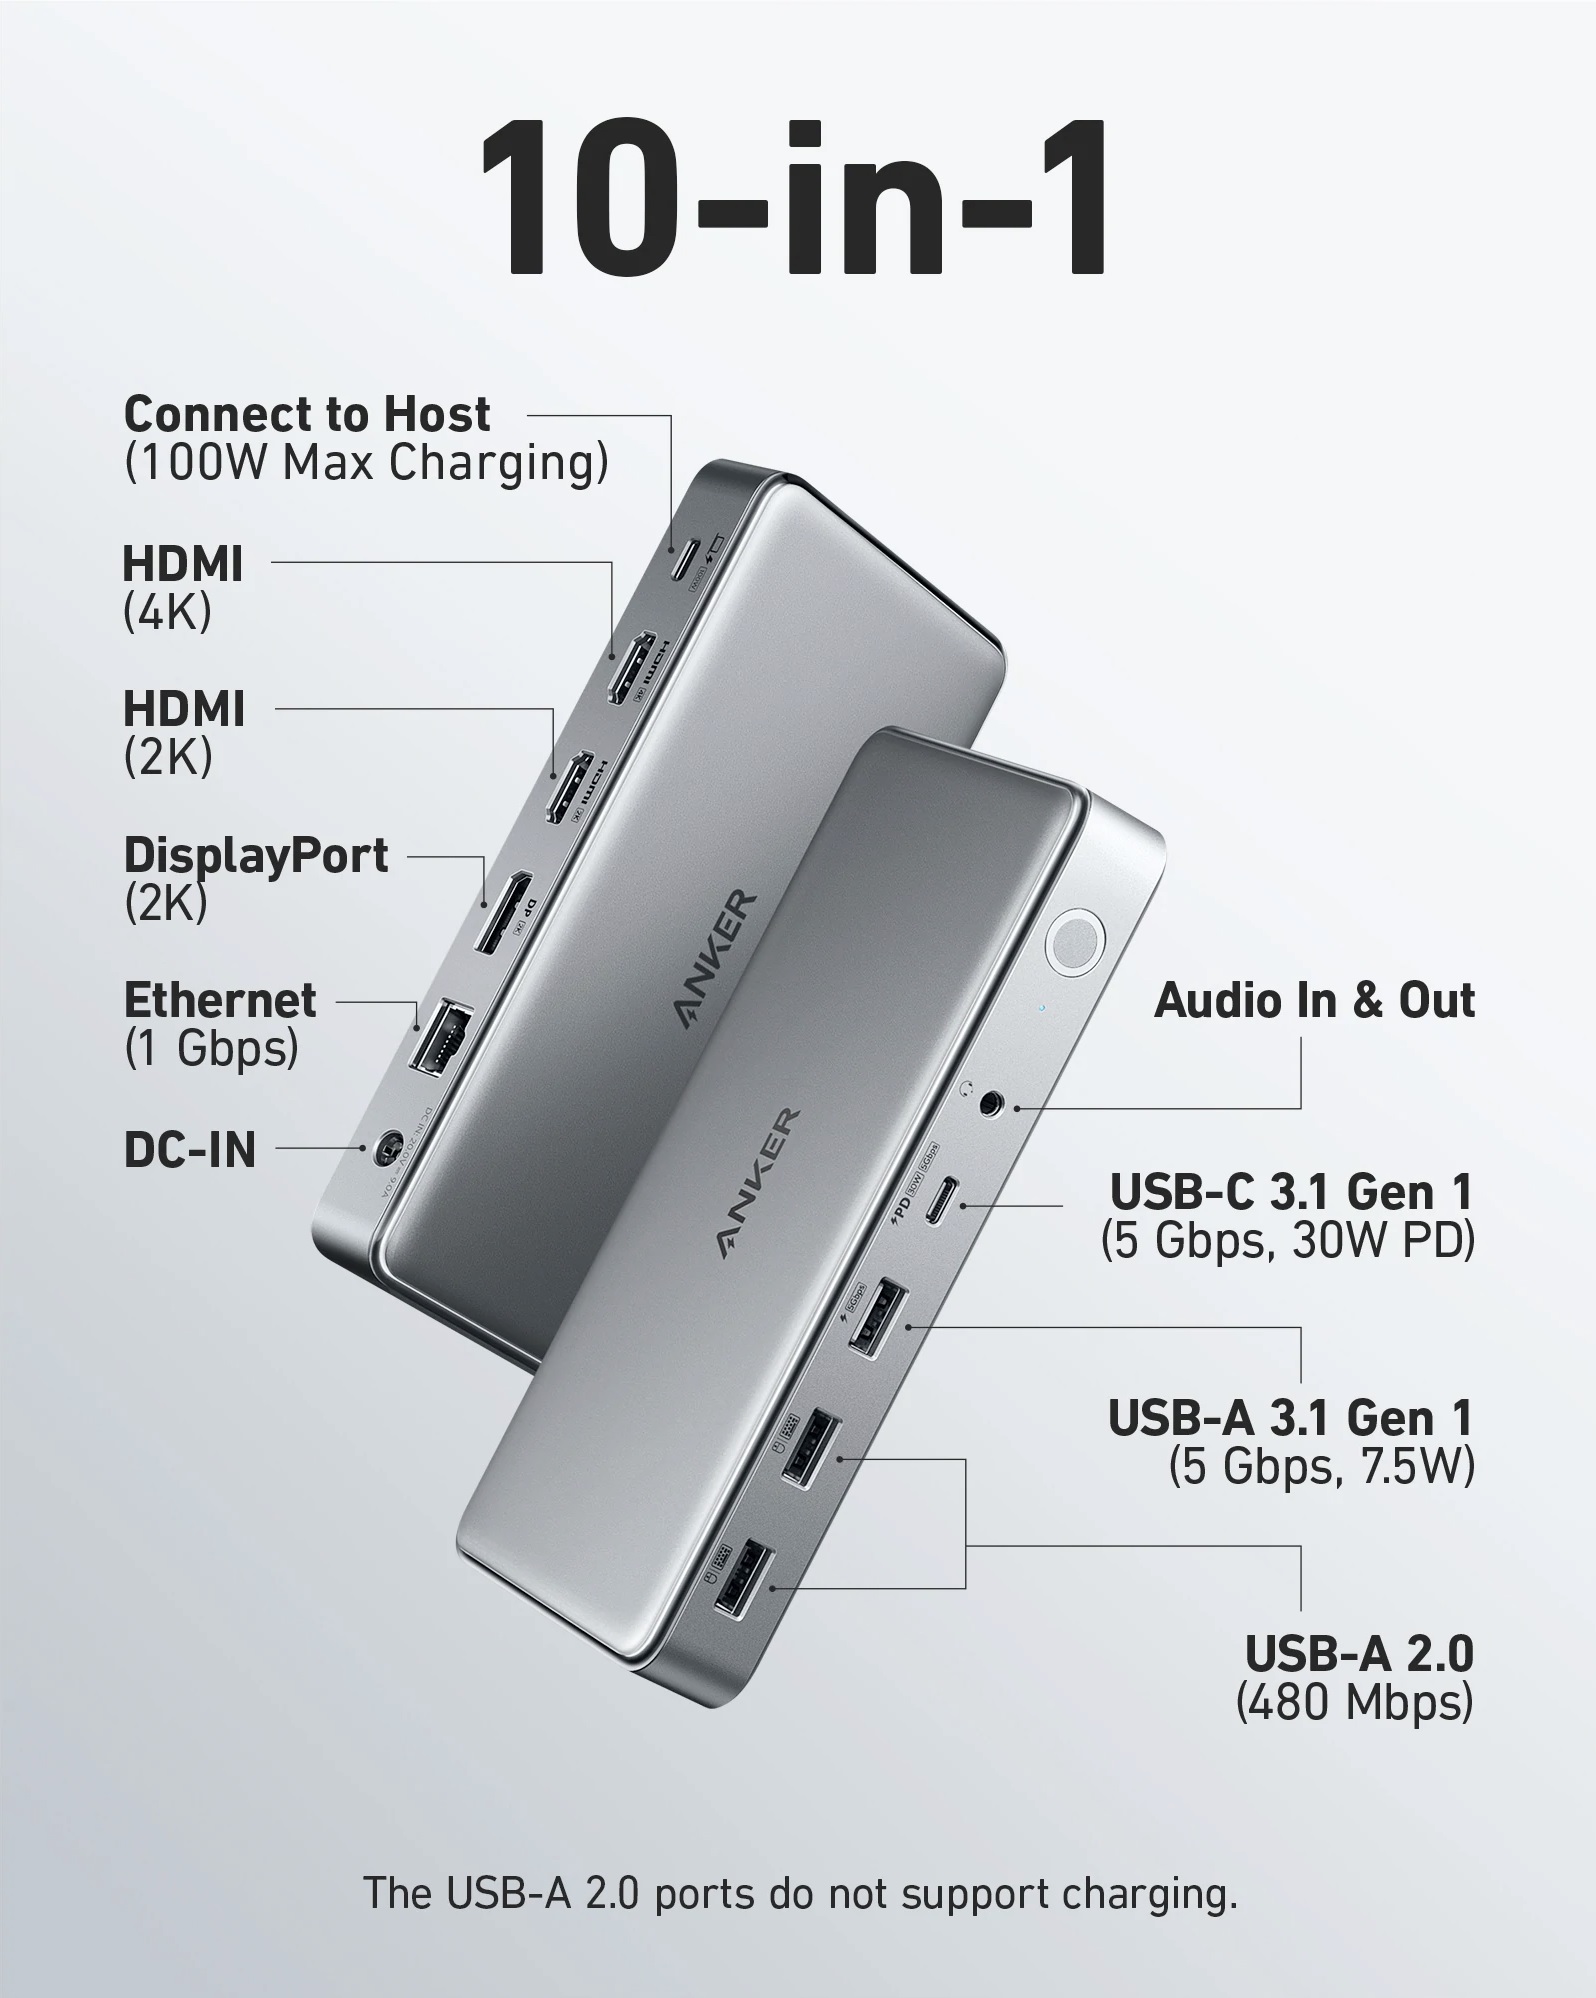 New Anker 547 USB-C Hub (7-in-2) optimized for recent MacBooks